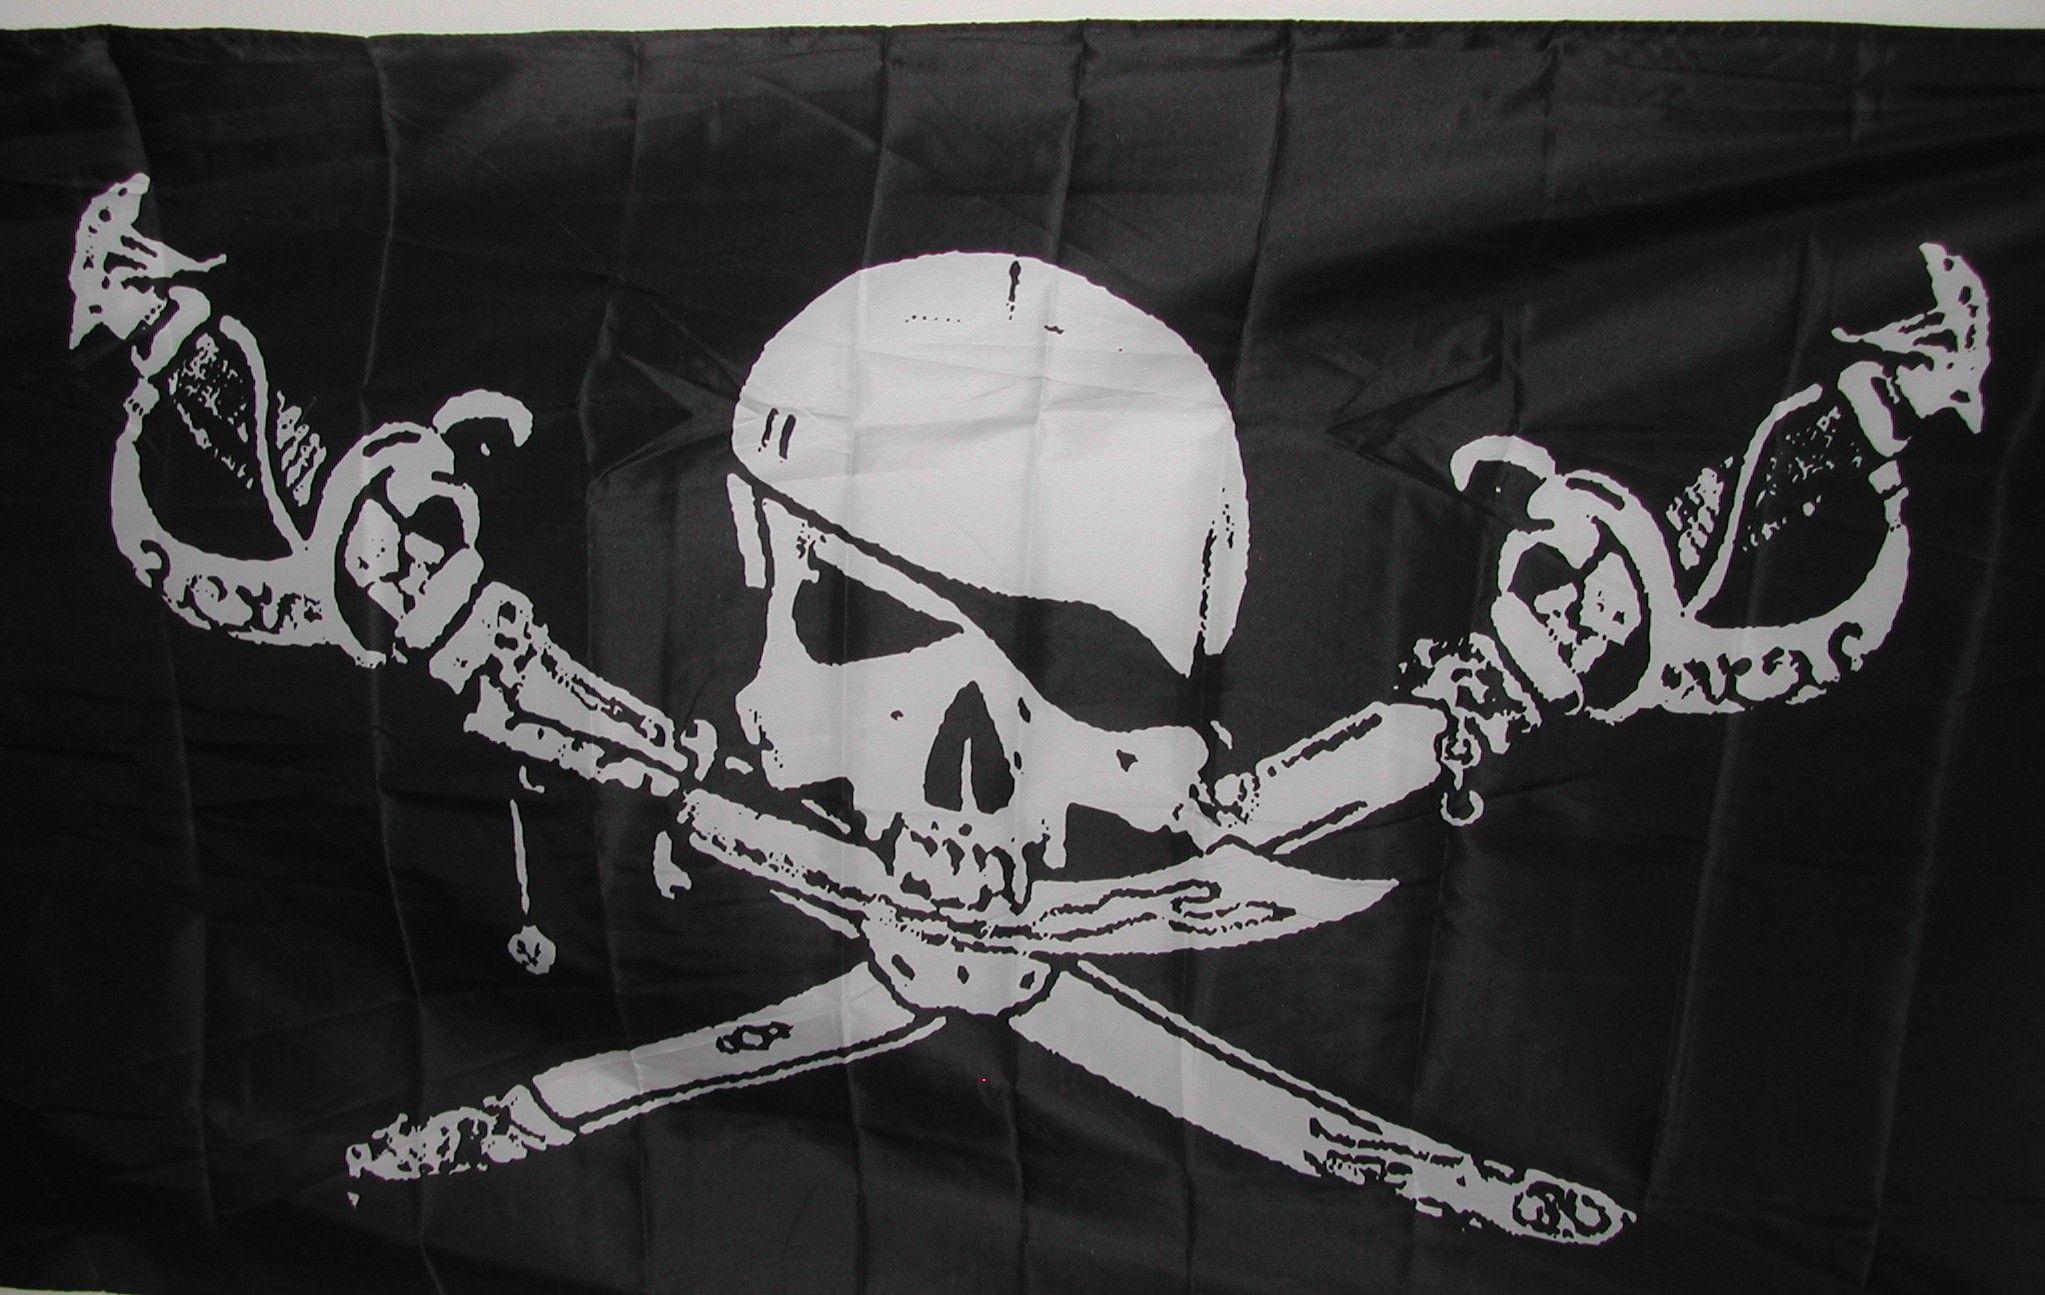 Pirate Flag Wallpaper